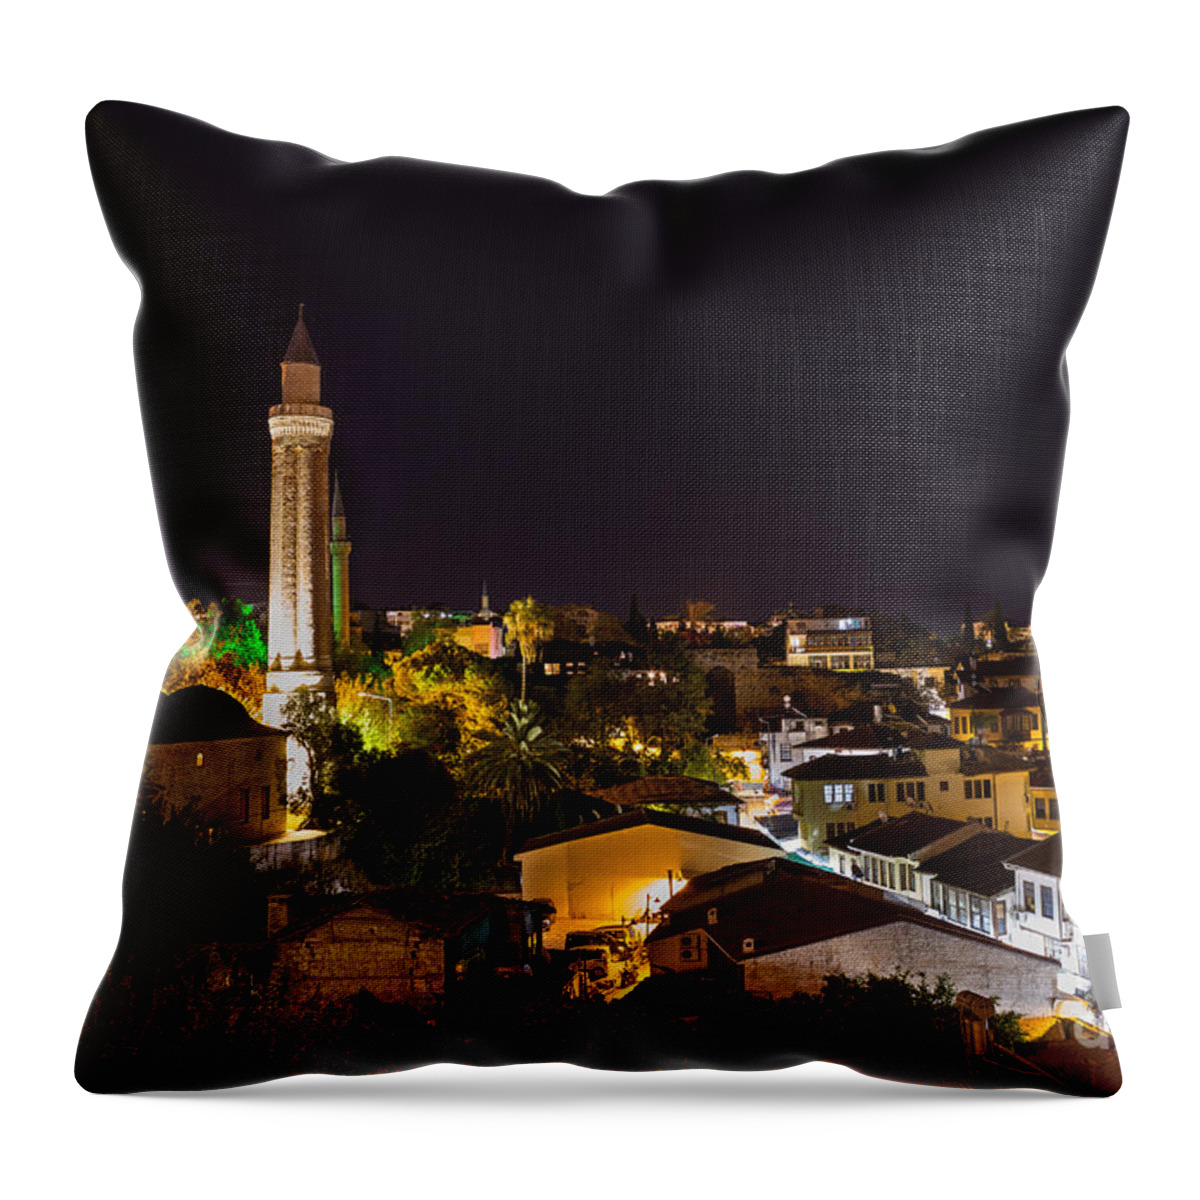 Antalya Throw Pillow featuring the photograph Antalya at Night by Bahadir Yeniceri